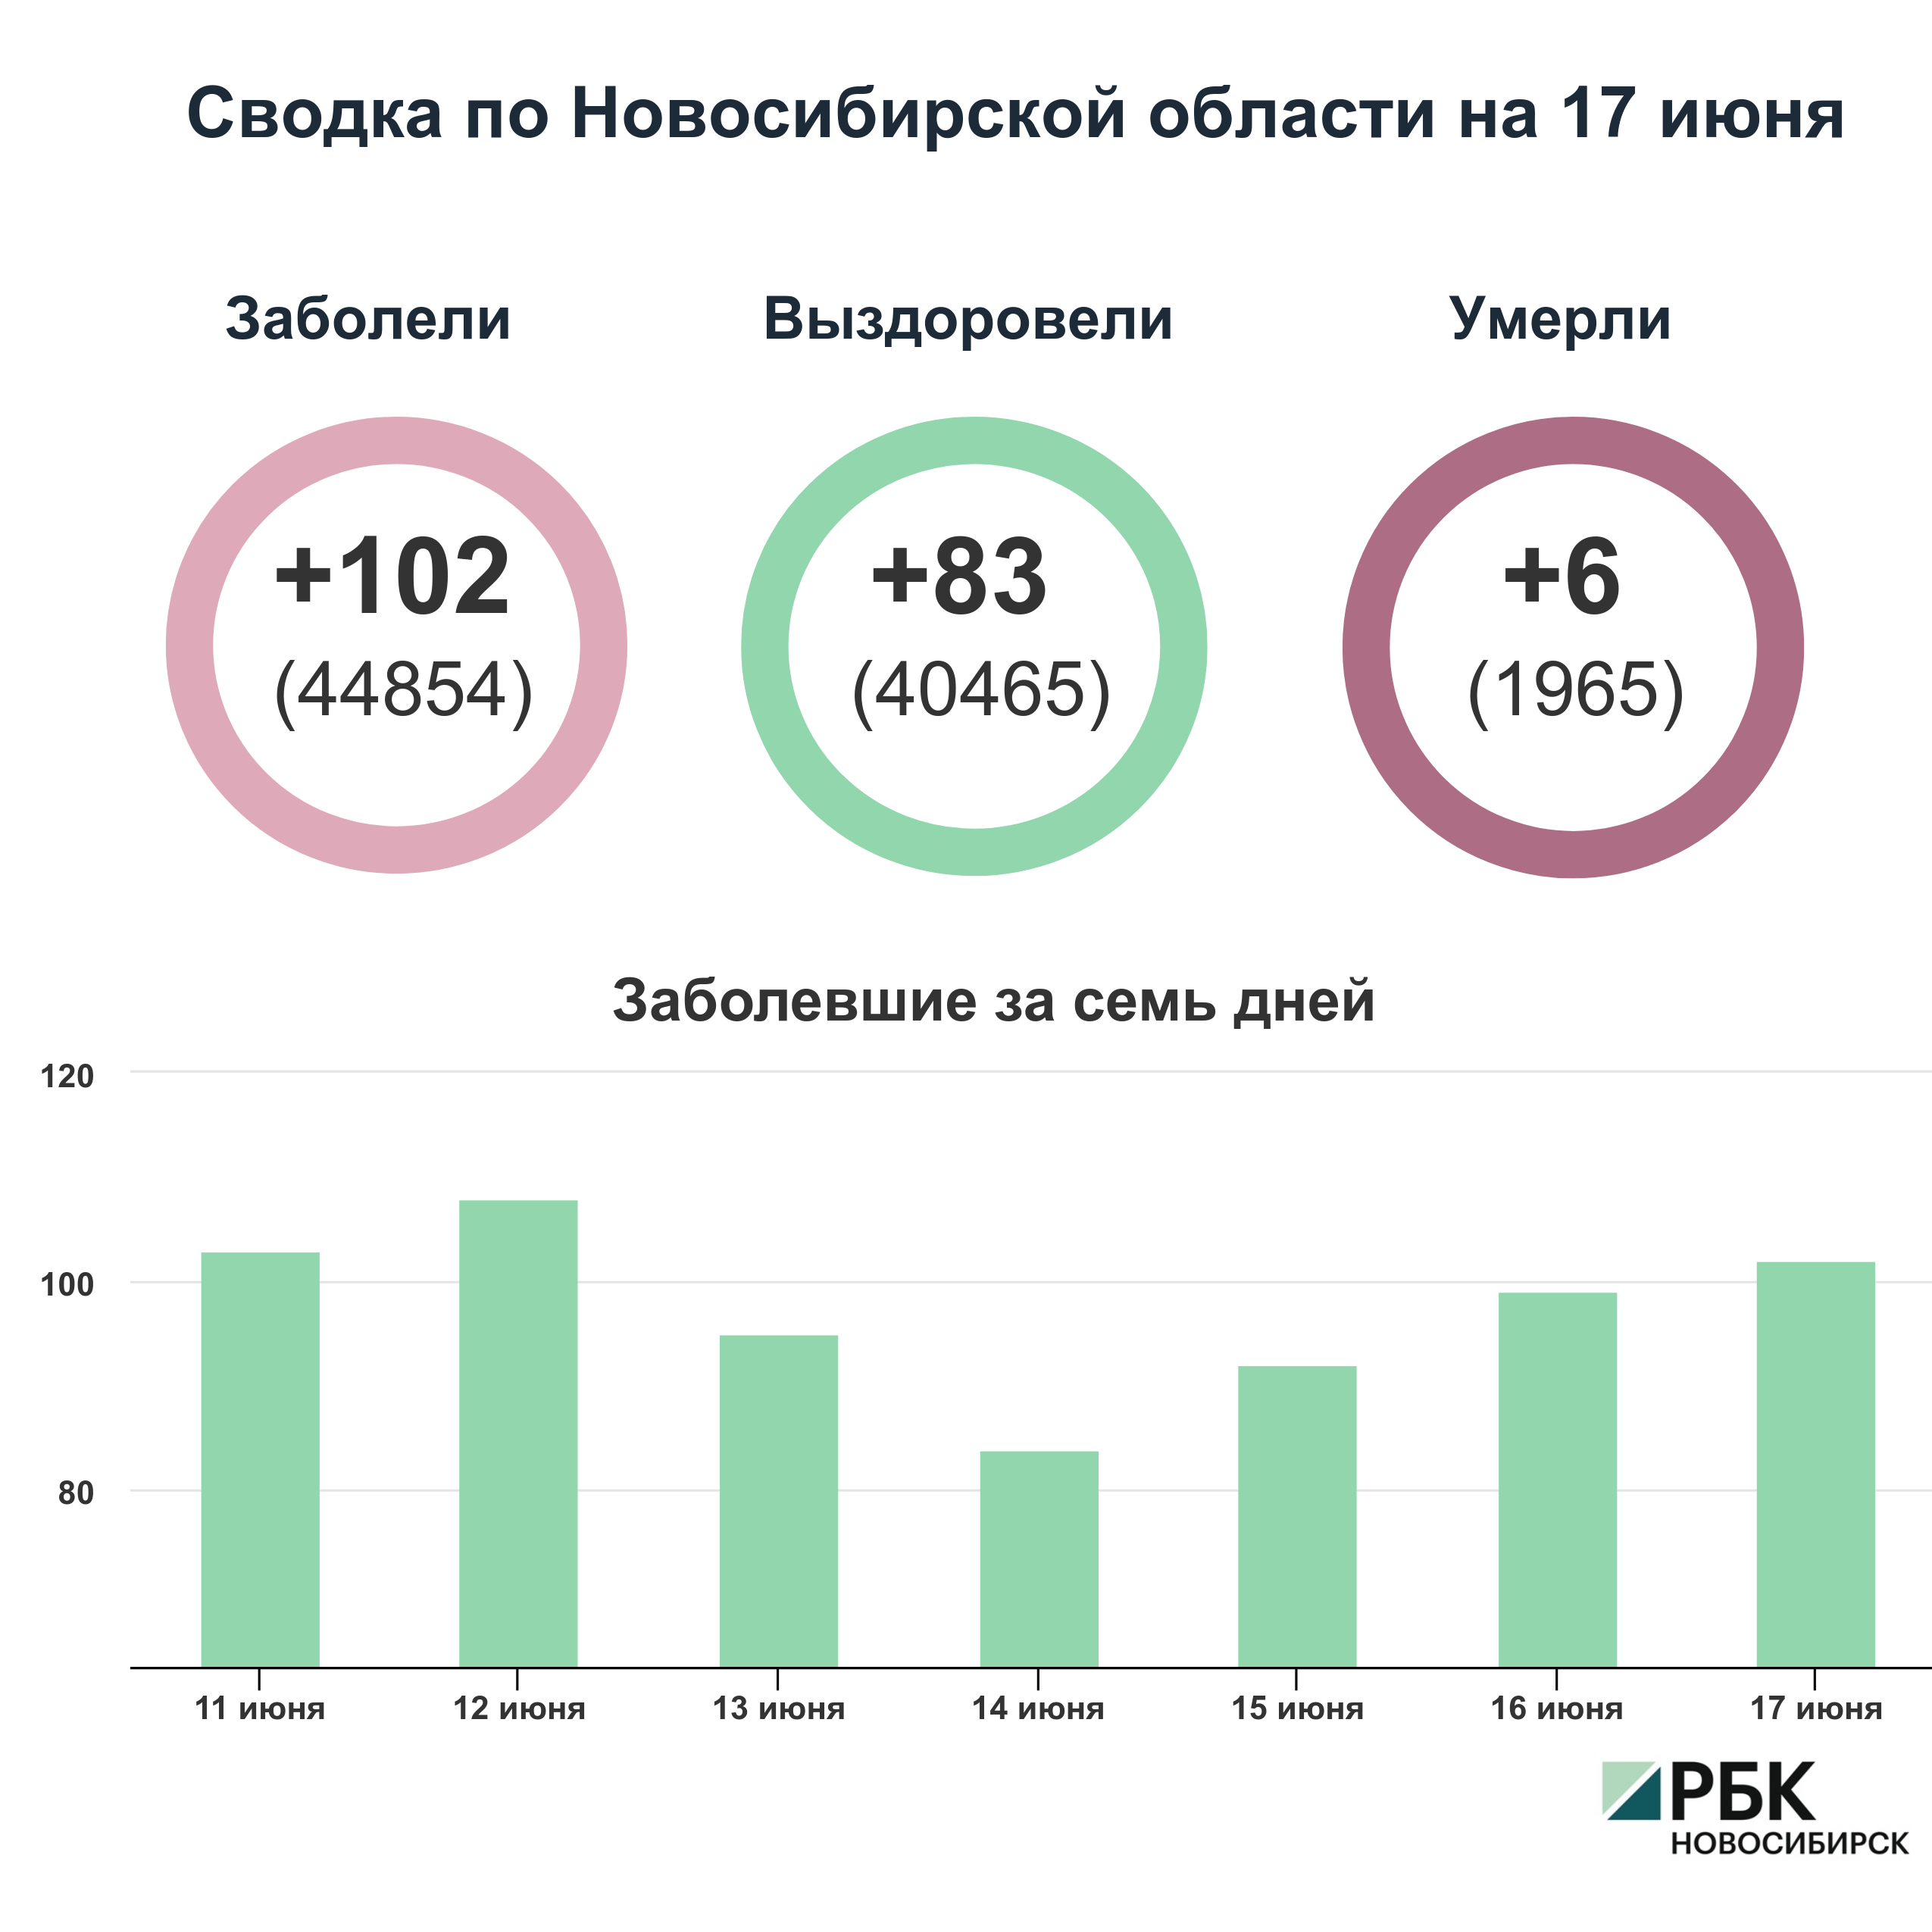 Коронавирус в Новосибирске: сводка на 17 июня